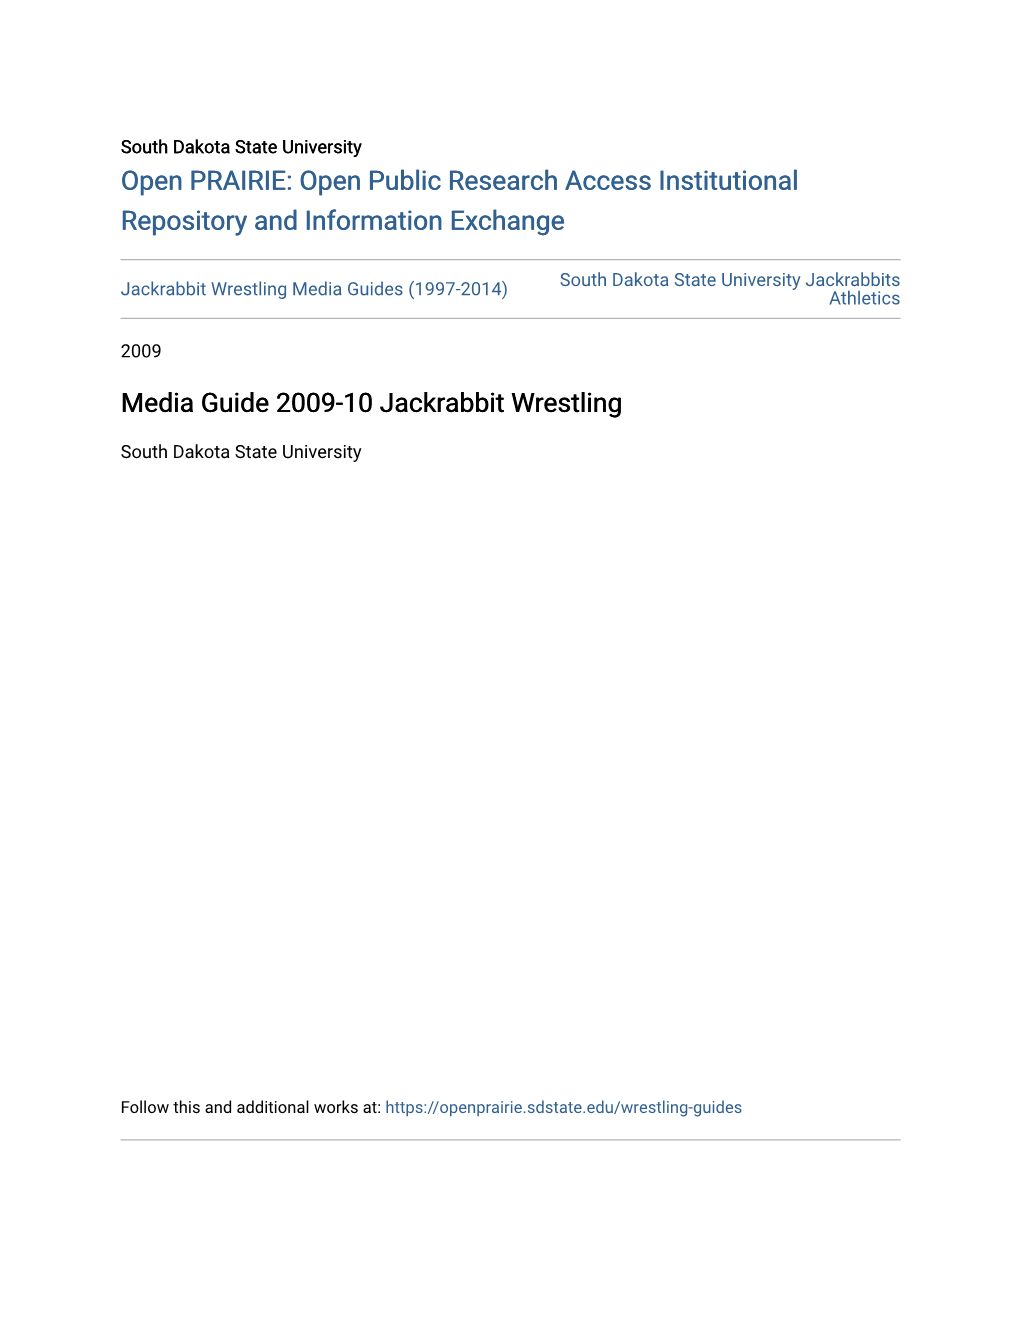 Media Guide 2009-10 Jackrabbit Wrestling